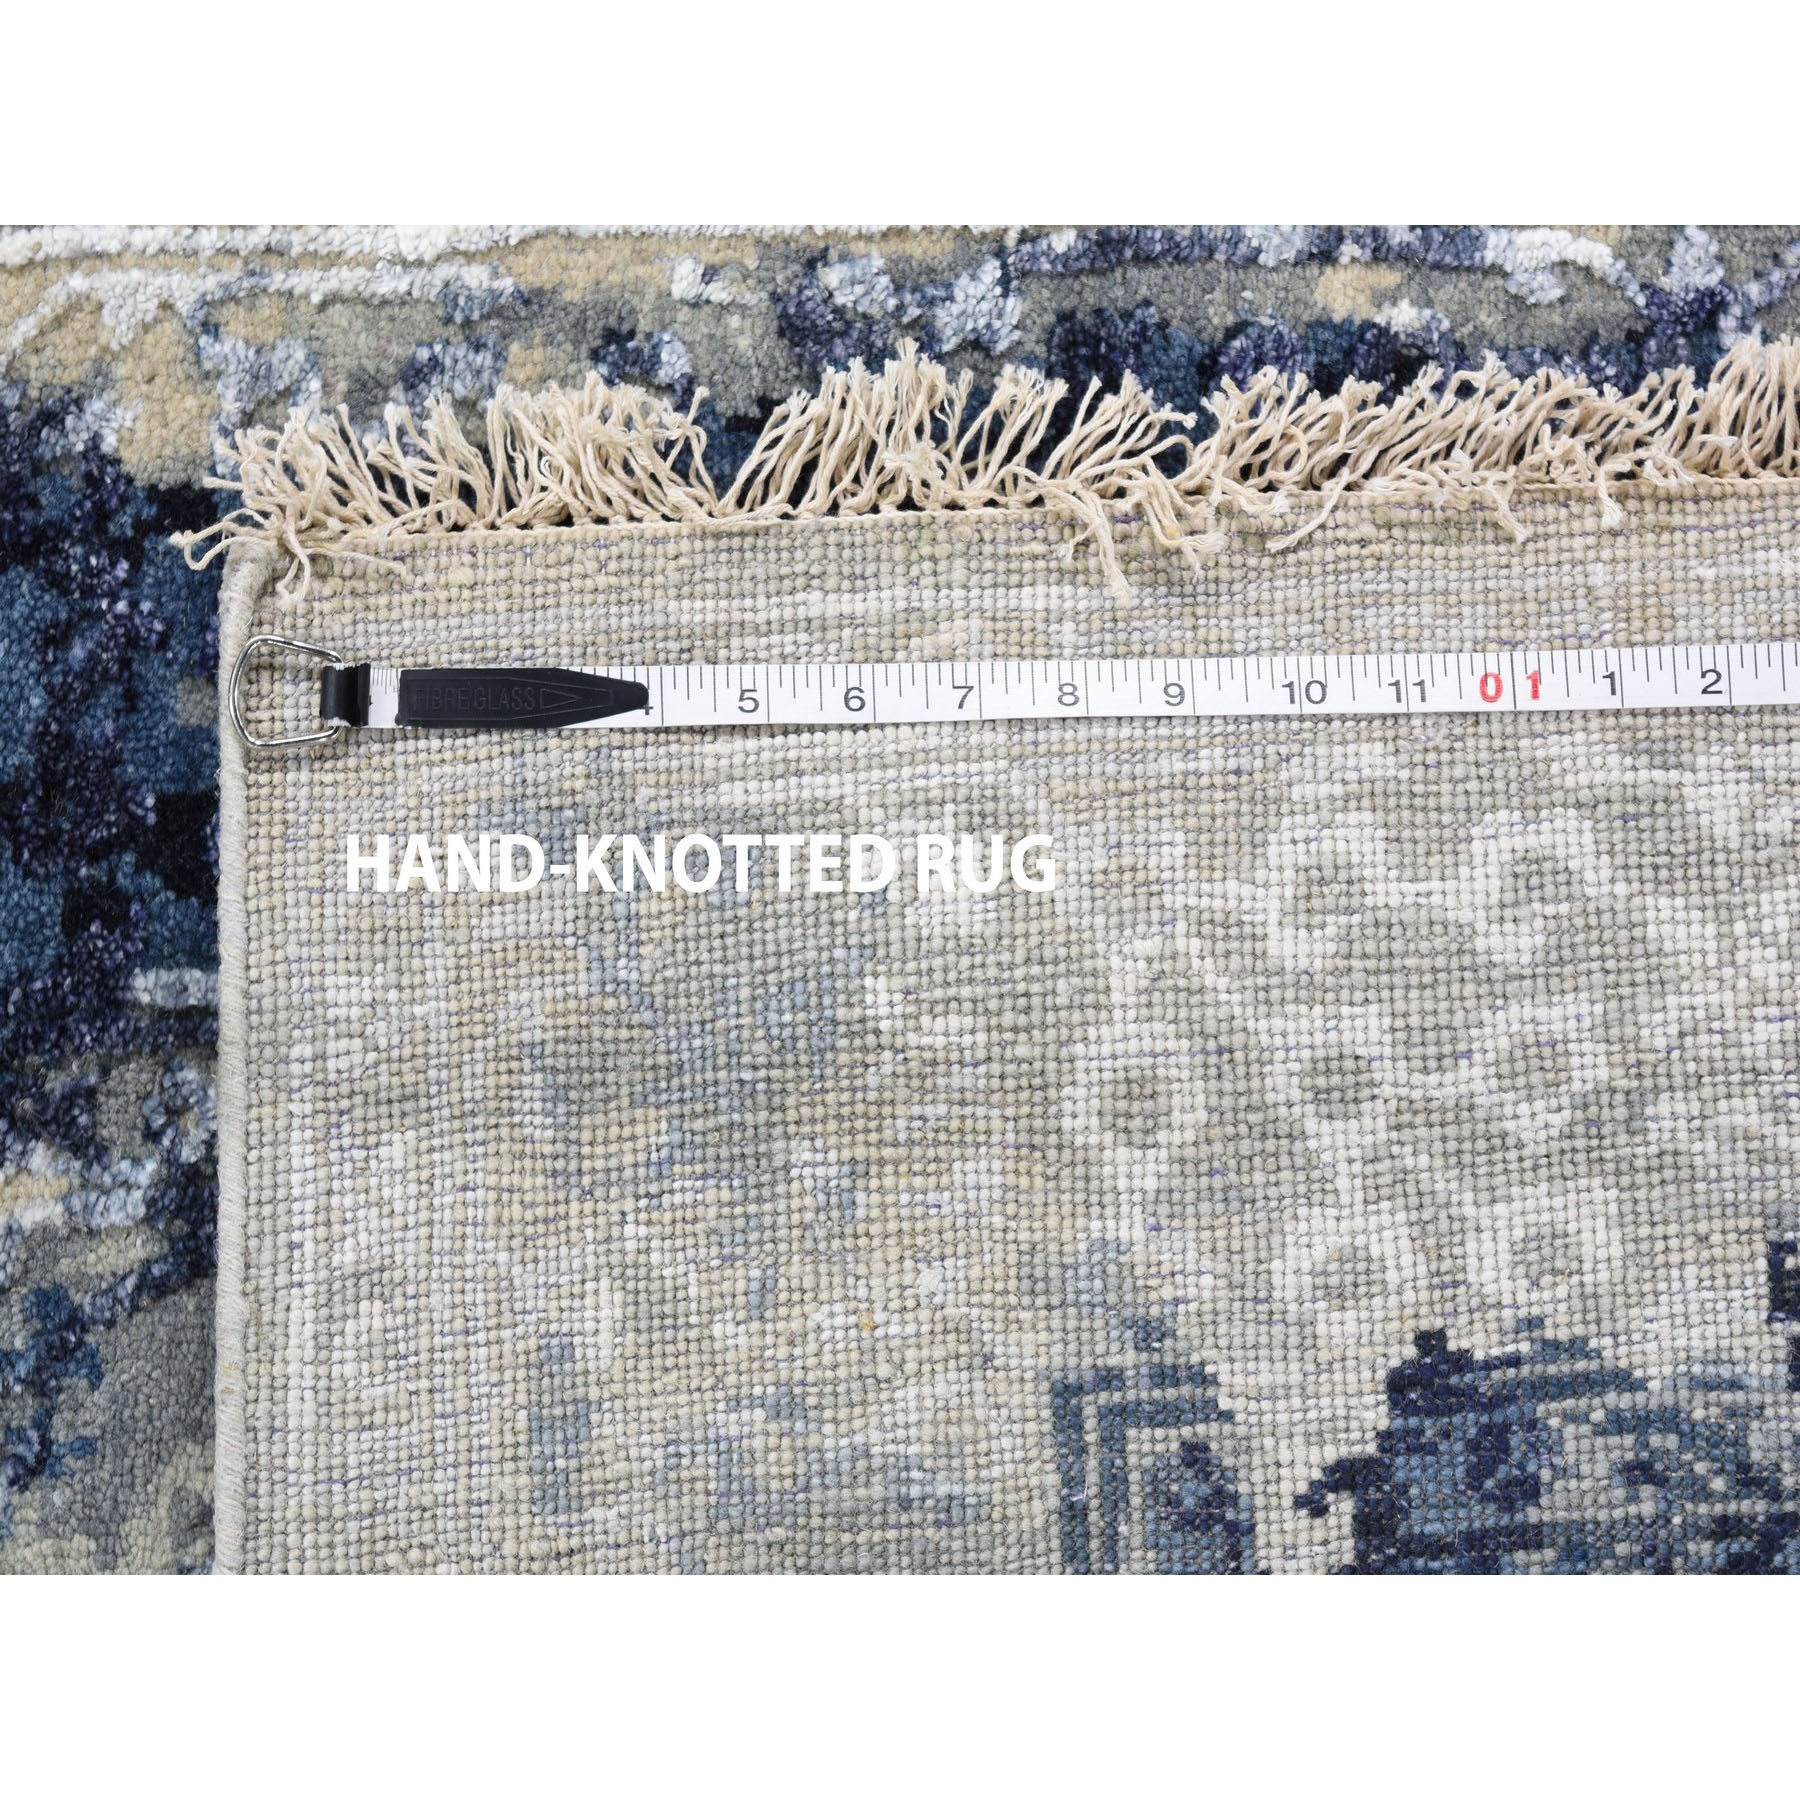 5-1 x6-10  Wool And Silk Shibori Design Tone On Tone Hand Knotted Oriental Rug 